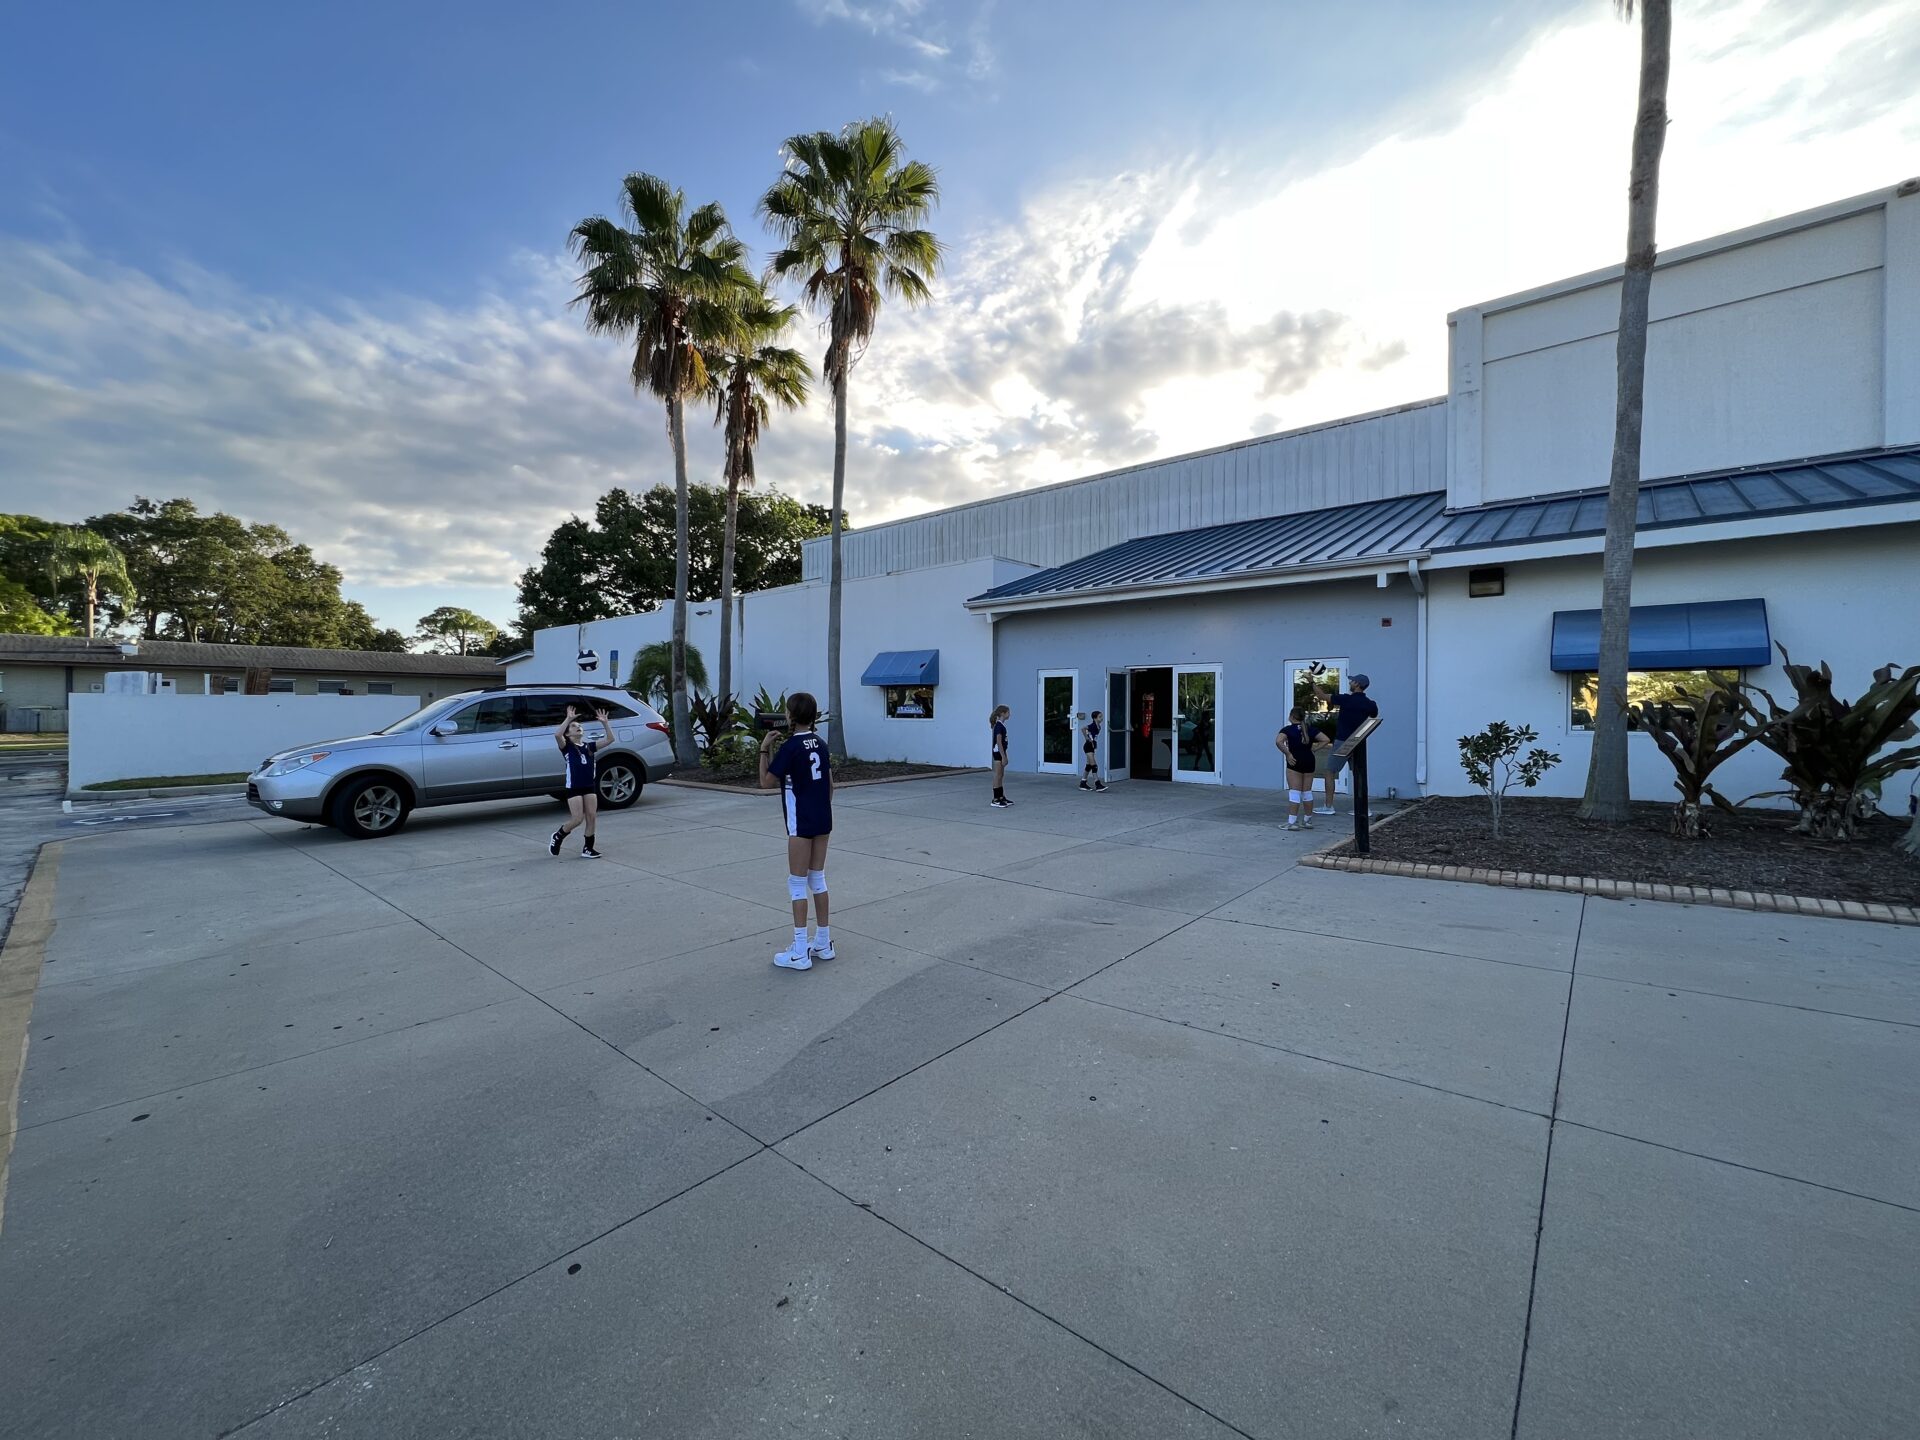 Elevation Prep Academy - location for Sarasota Volleyball Club in Sarasota, FL